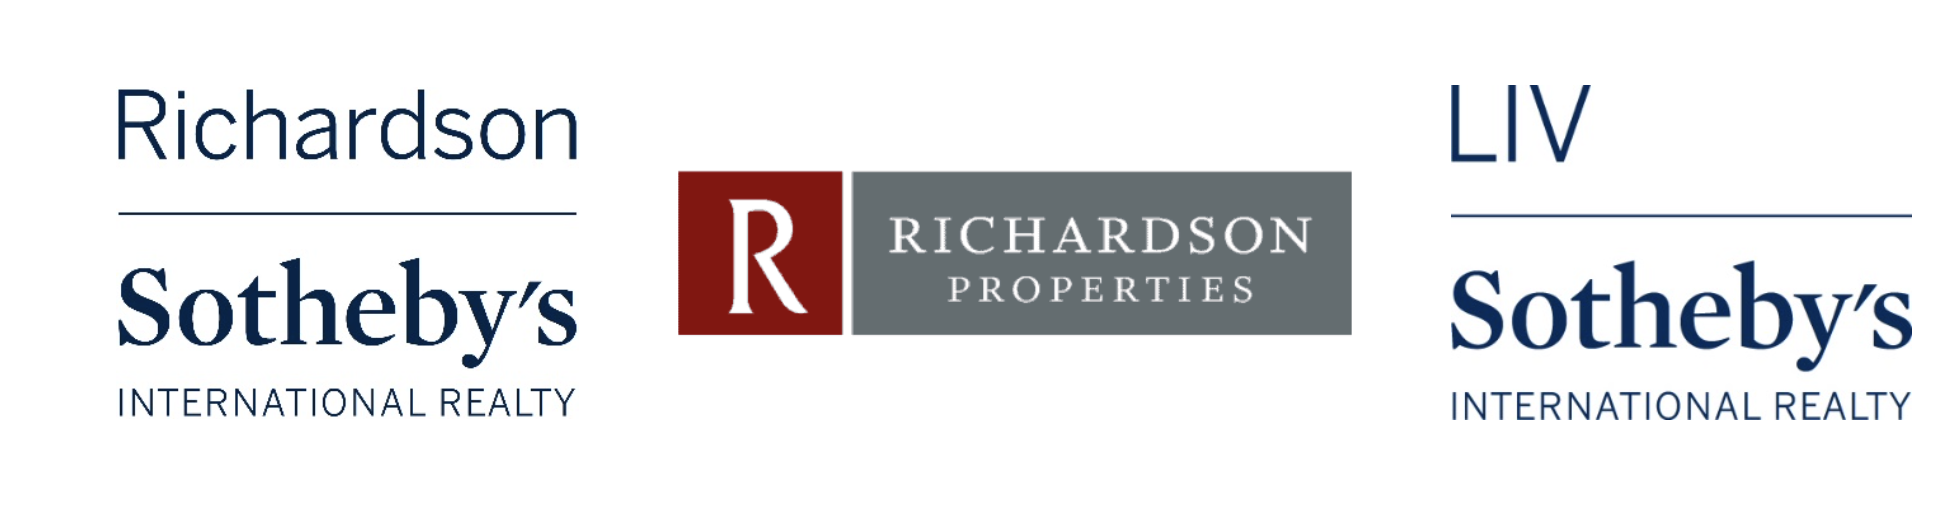 Richardson Properties and LIV Sothebys